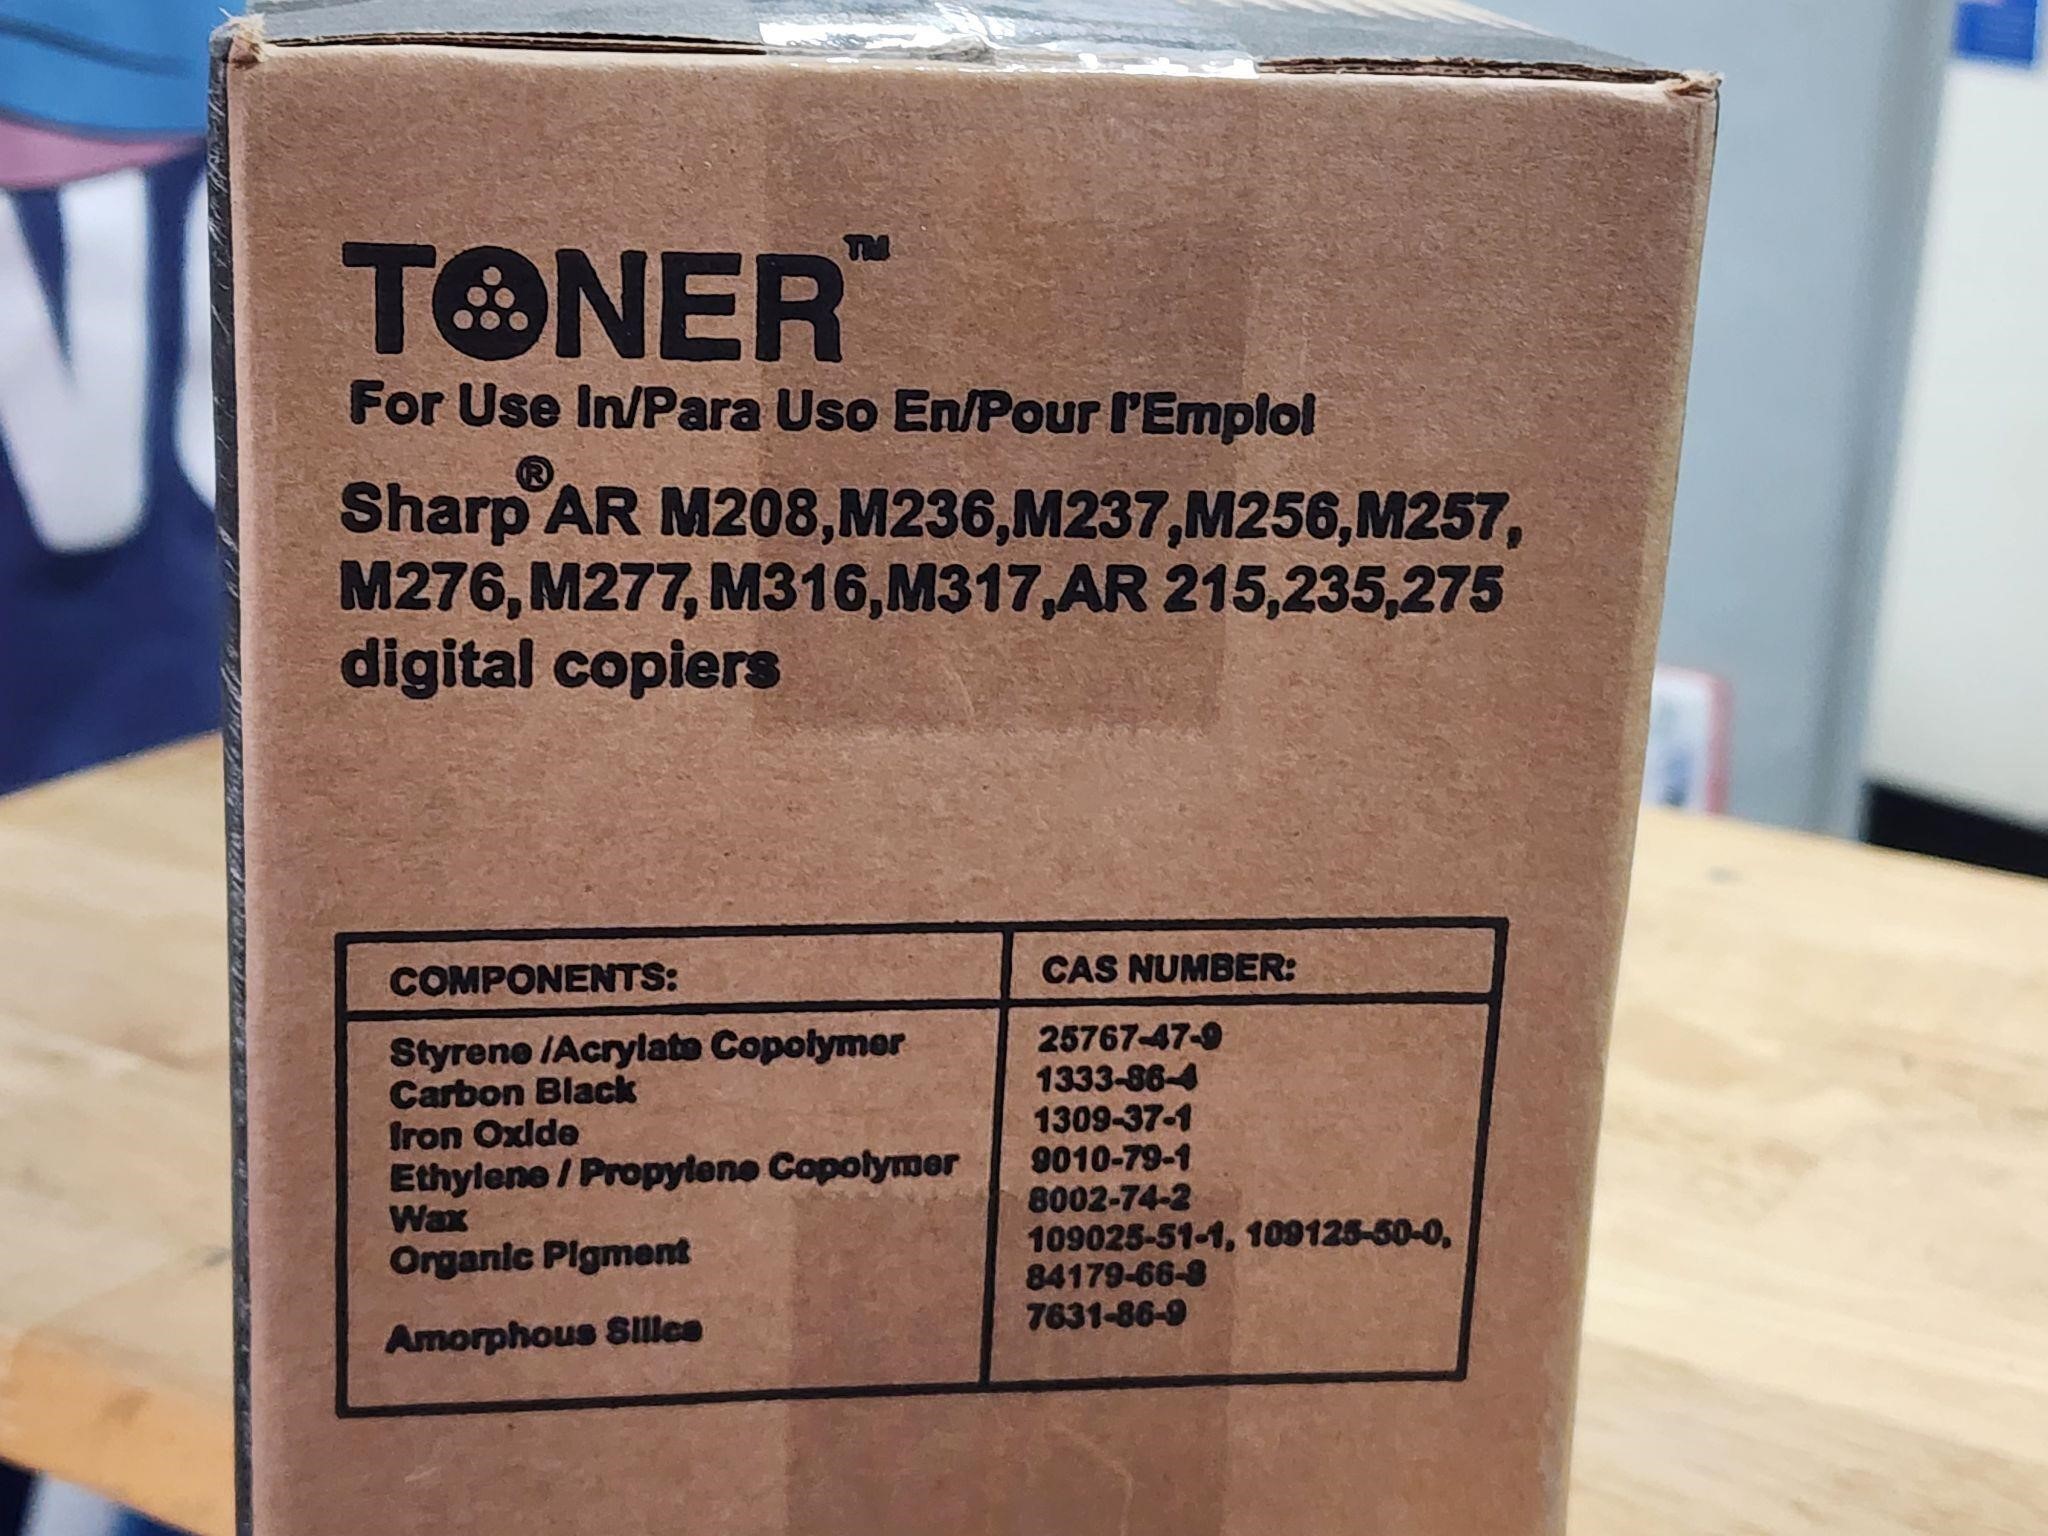 Taylored PCs Toner Auction